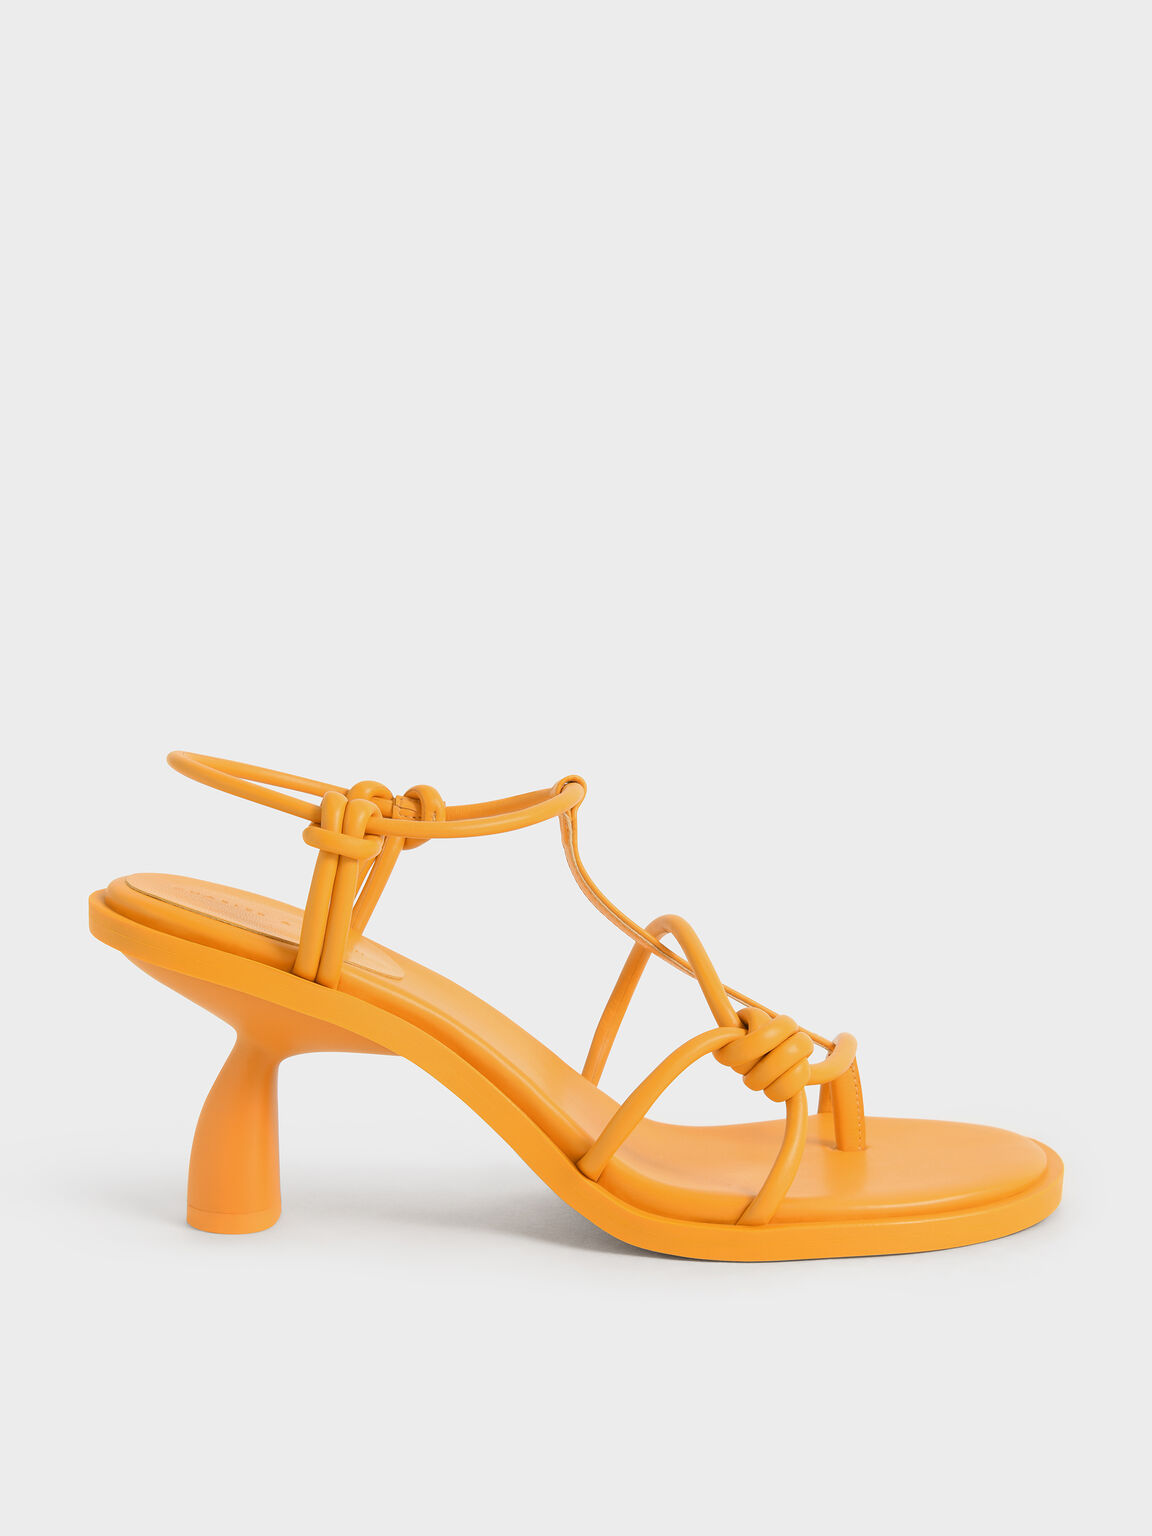 Alma 繩結夾腳高跟涼鞋, 橘色, hi-res